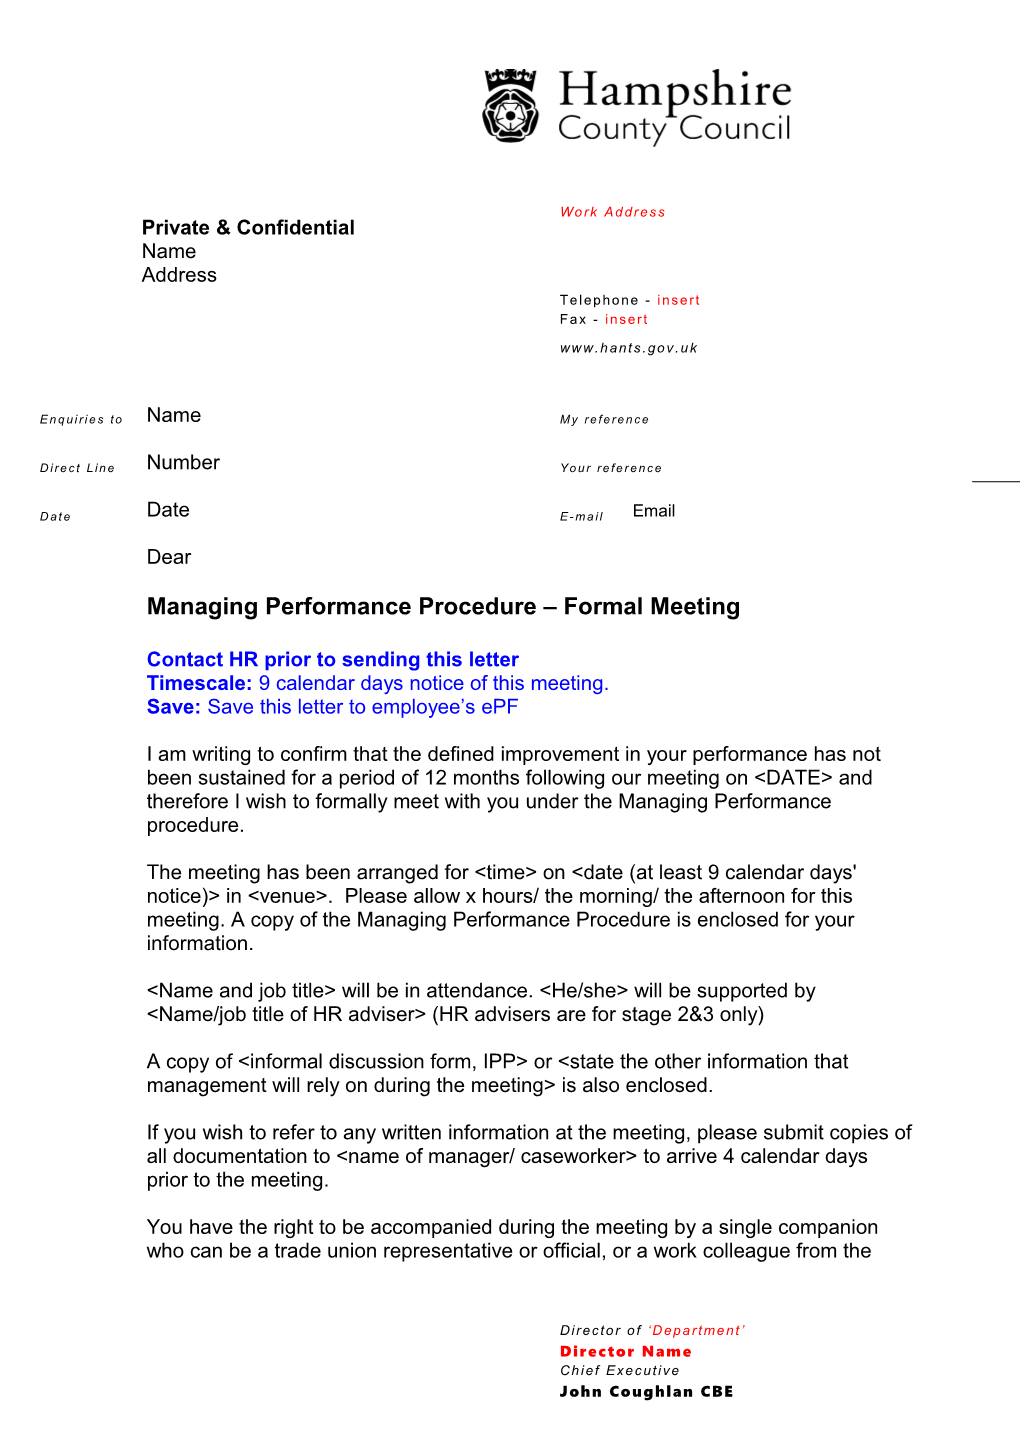 Managing Performance Procedure Formal Meeting